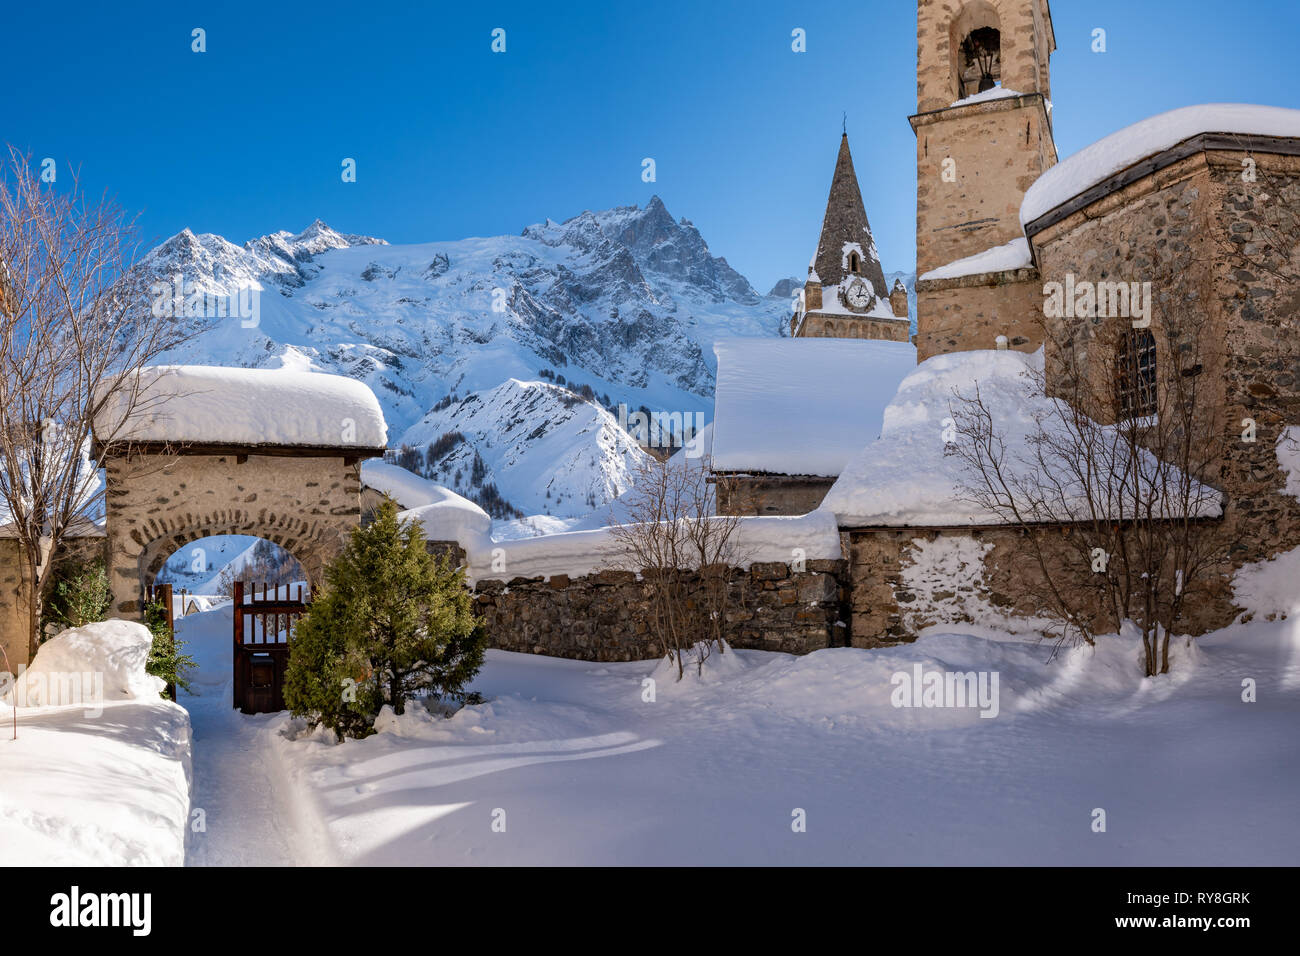 La Grave, Hautes-Alpes, Ecrins National Park, France: The local village of La Grave and its church with La Meije mountain peak in Winter Stock Photo